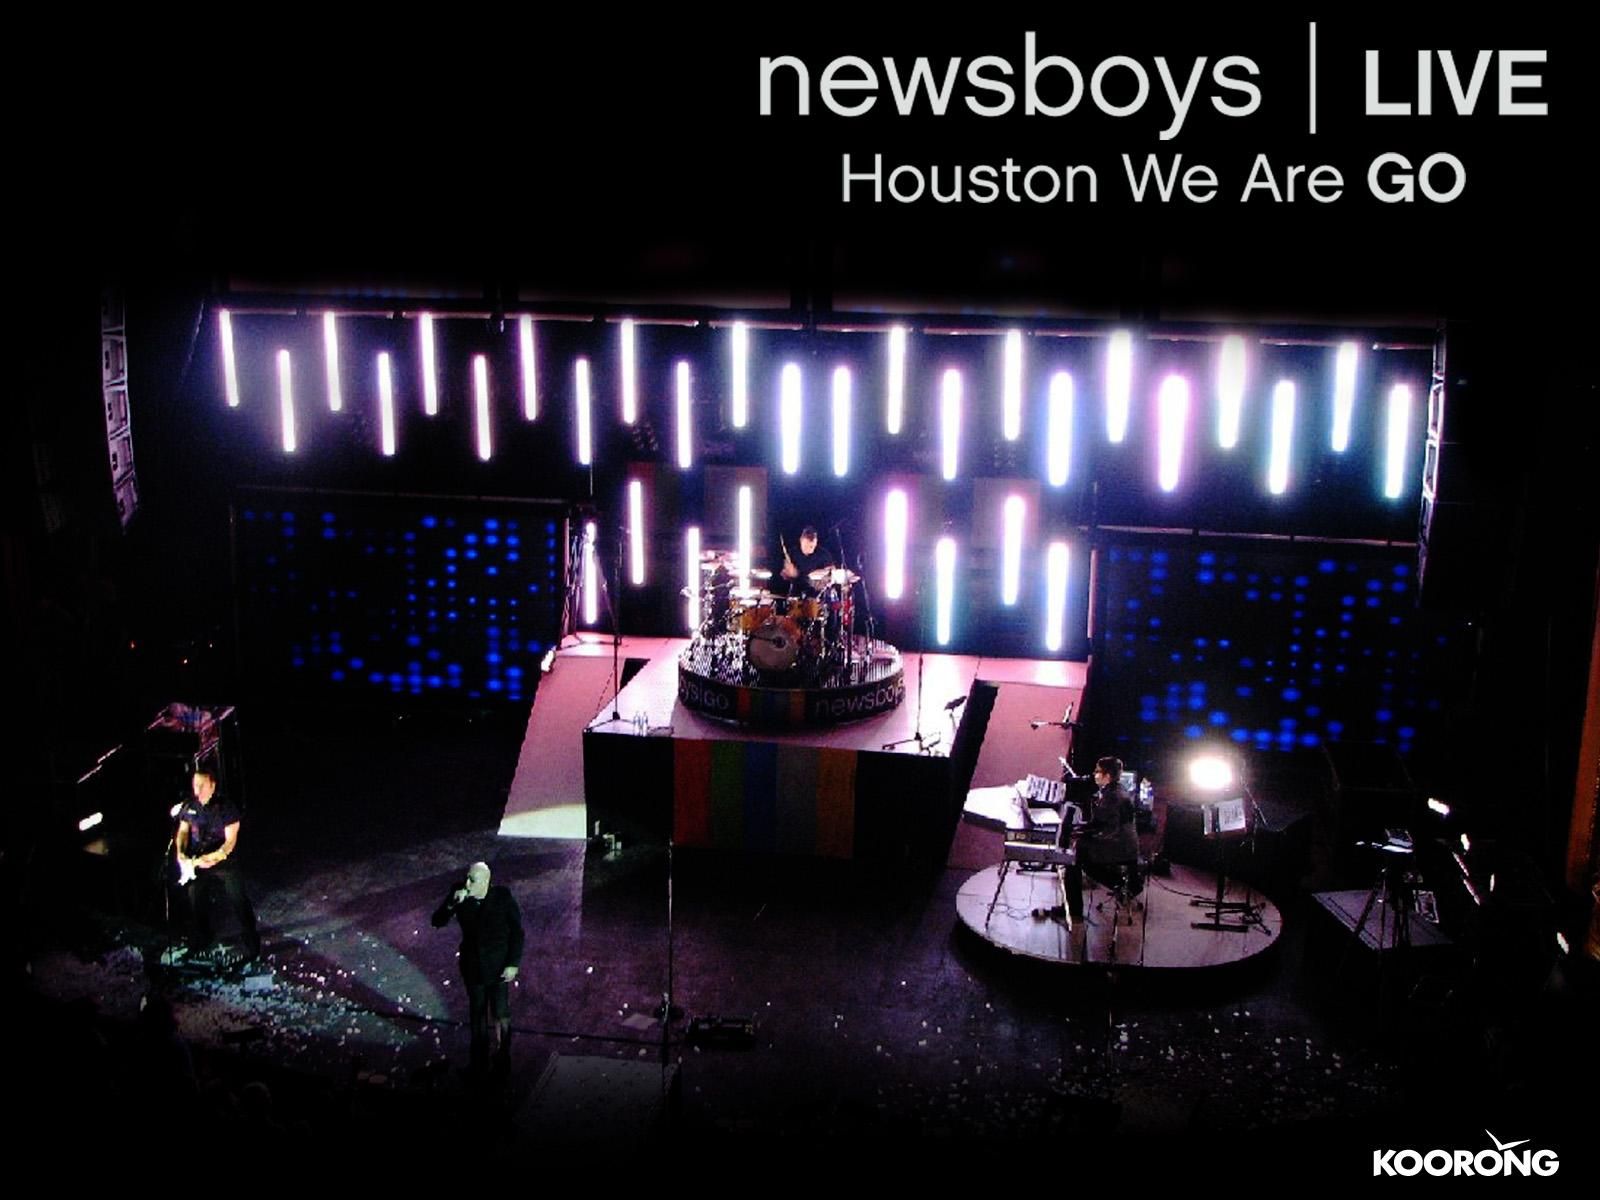 Newsboys Live Christian Wallpaper Free Download - Newsboys Houston We Are Go - HD Wallpaper 